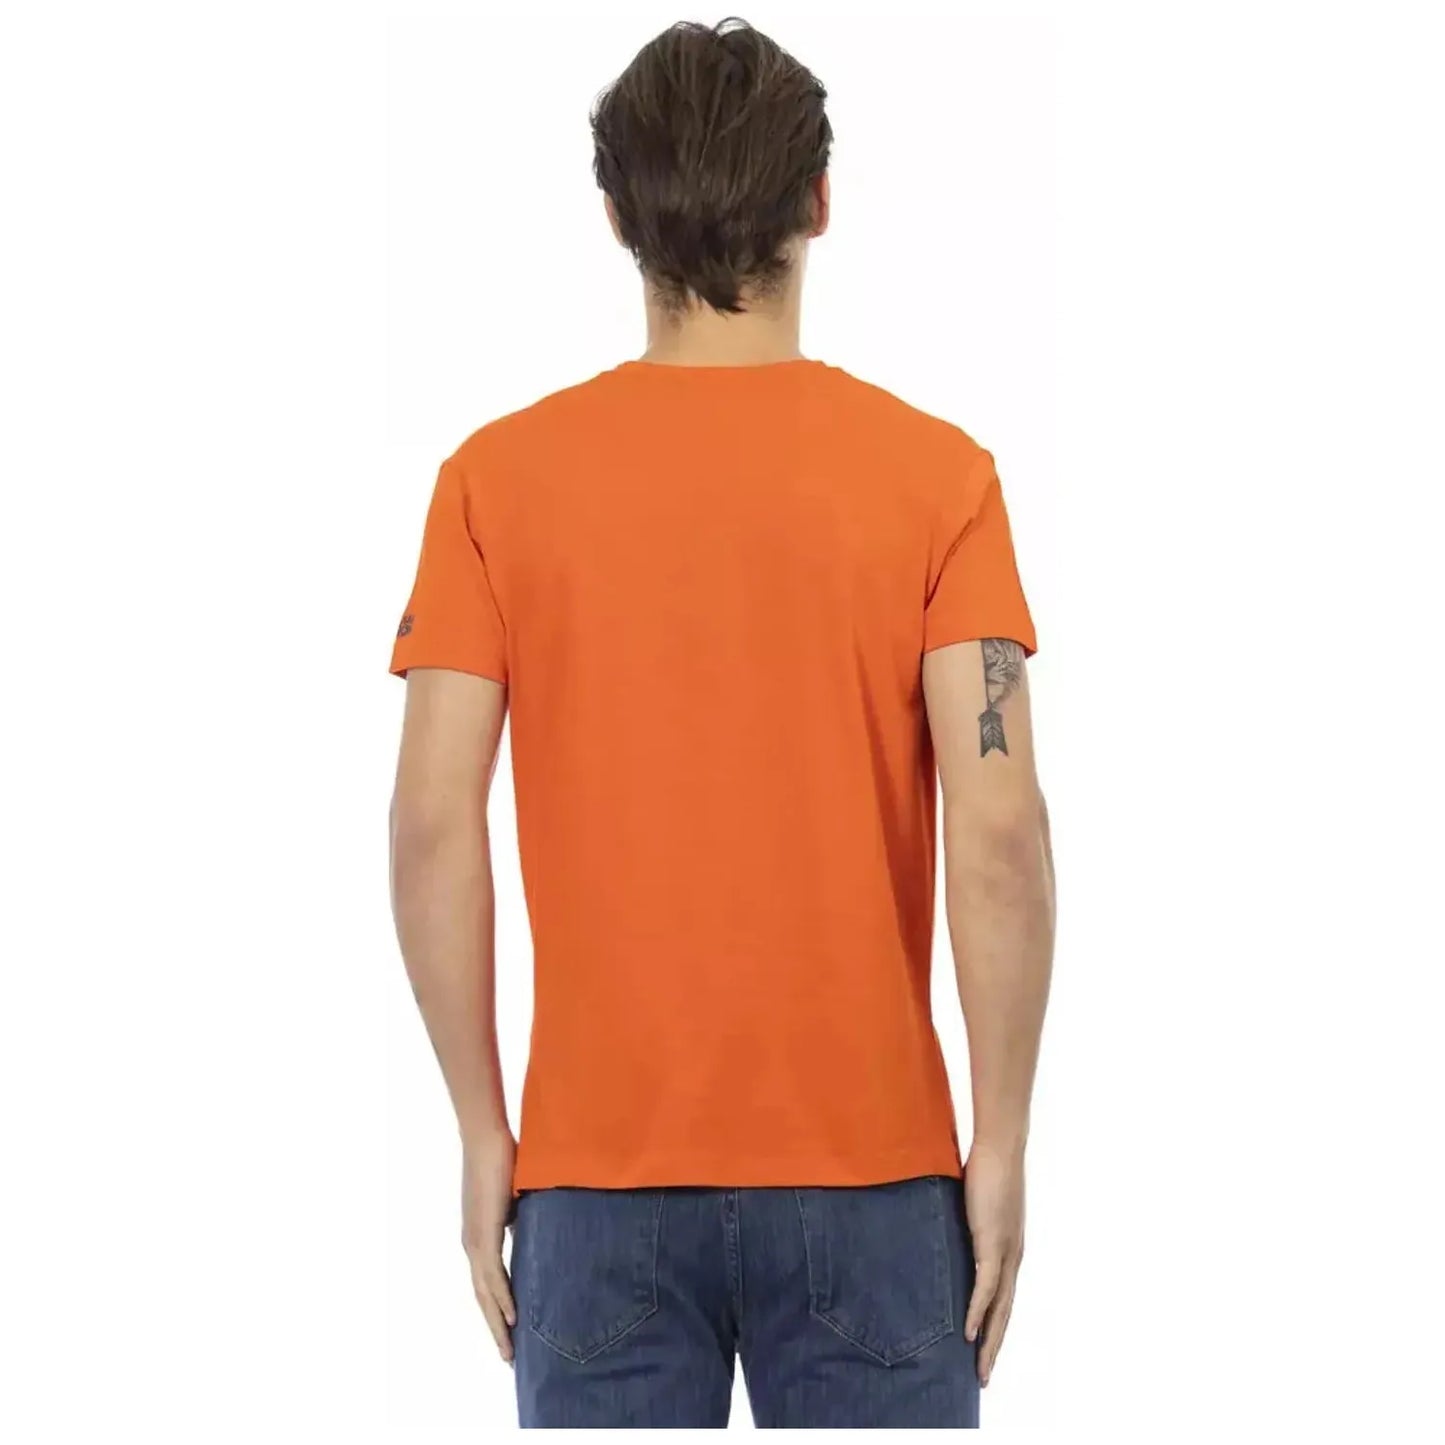 Trussardi Action Elegant V-Neck Tee with Vibrant Front Print orange-cotton-t-shirt-7